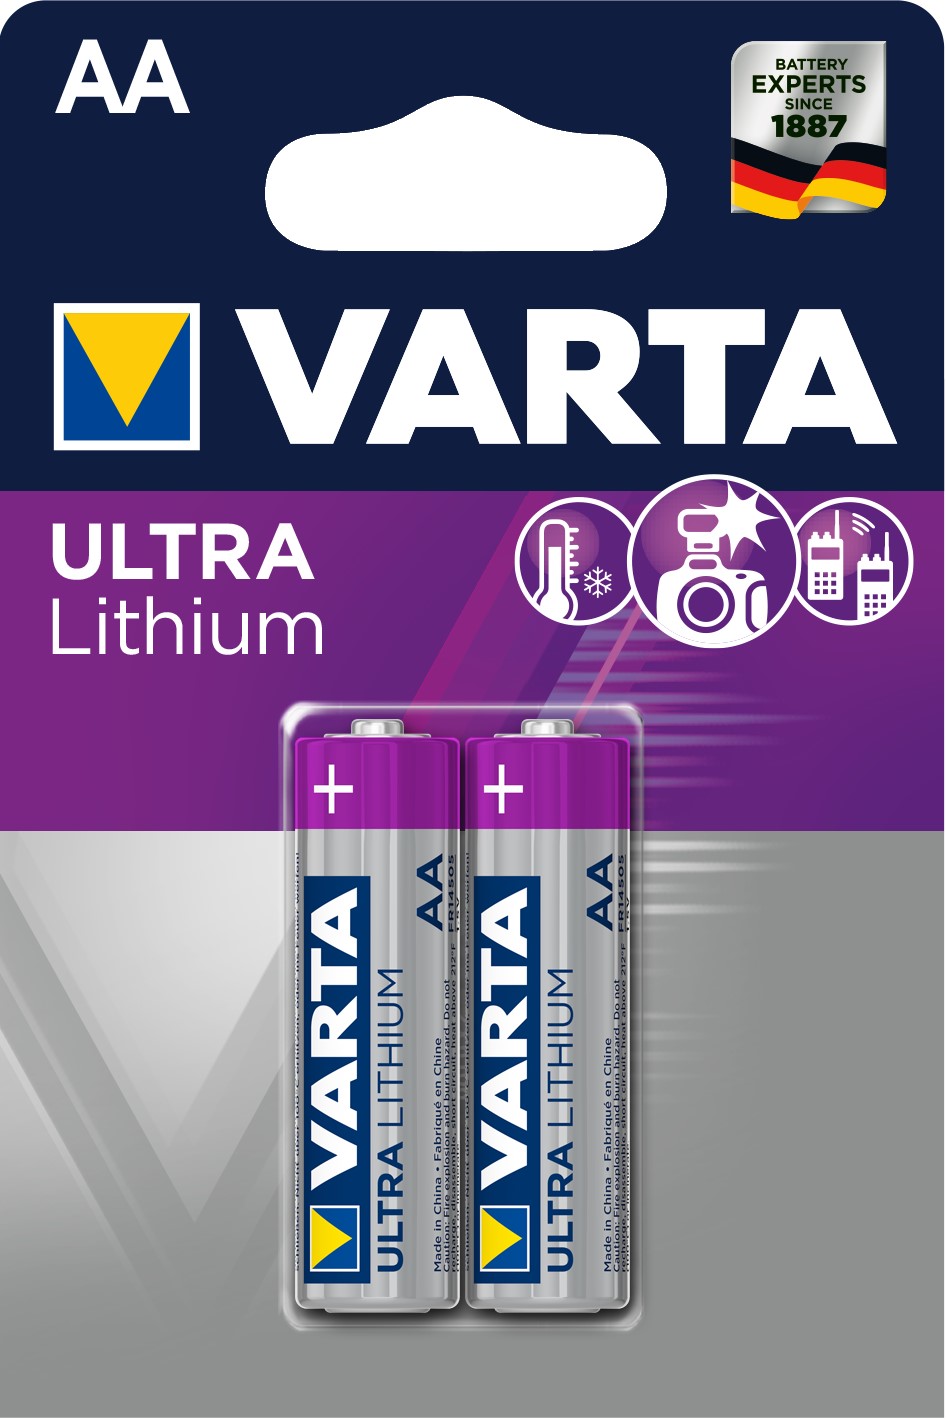 VARTA AA x2 Pile lithium 1,5V - Vaica - spécialiste batteries